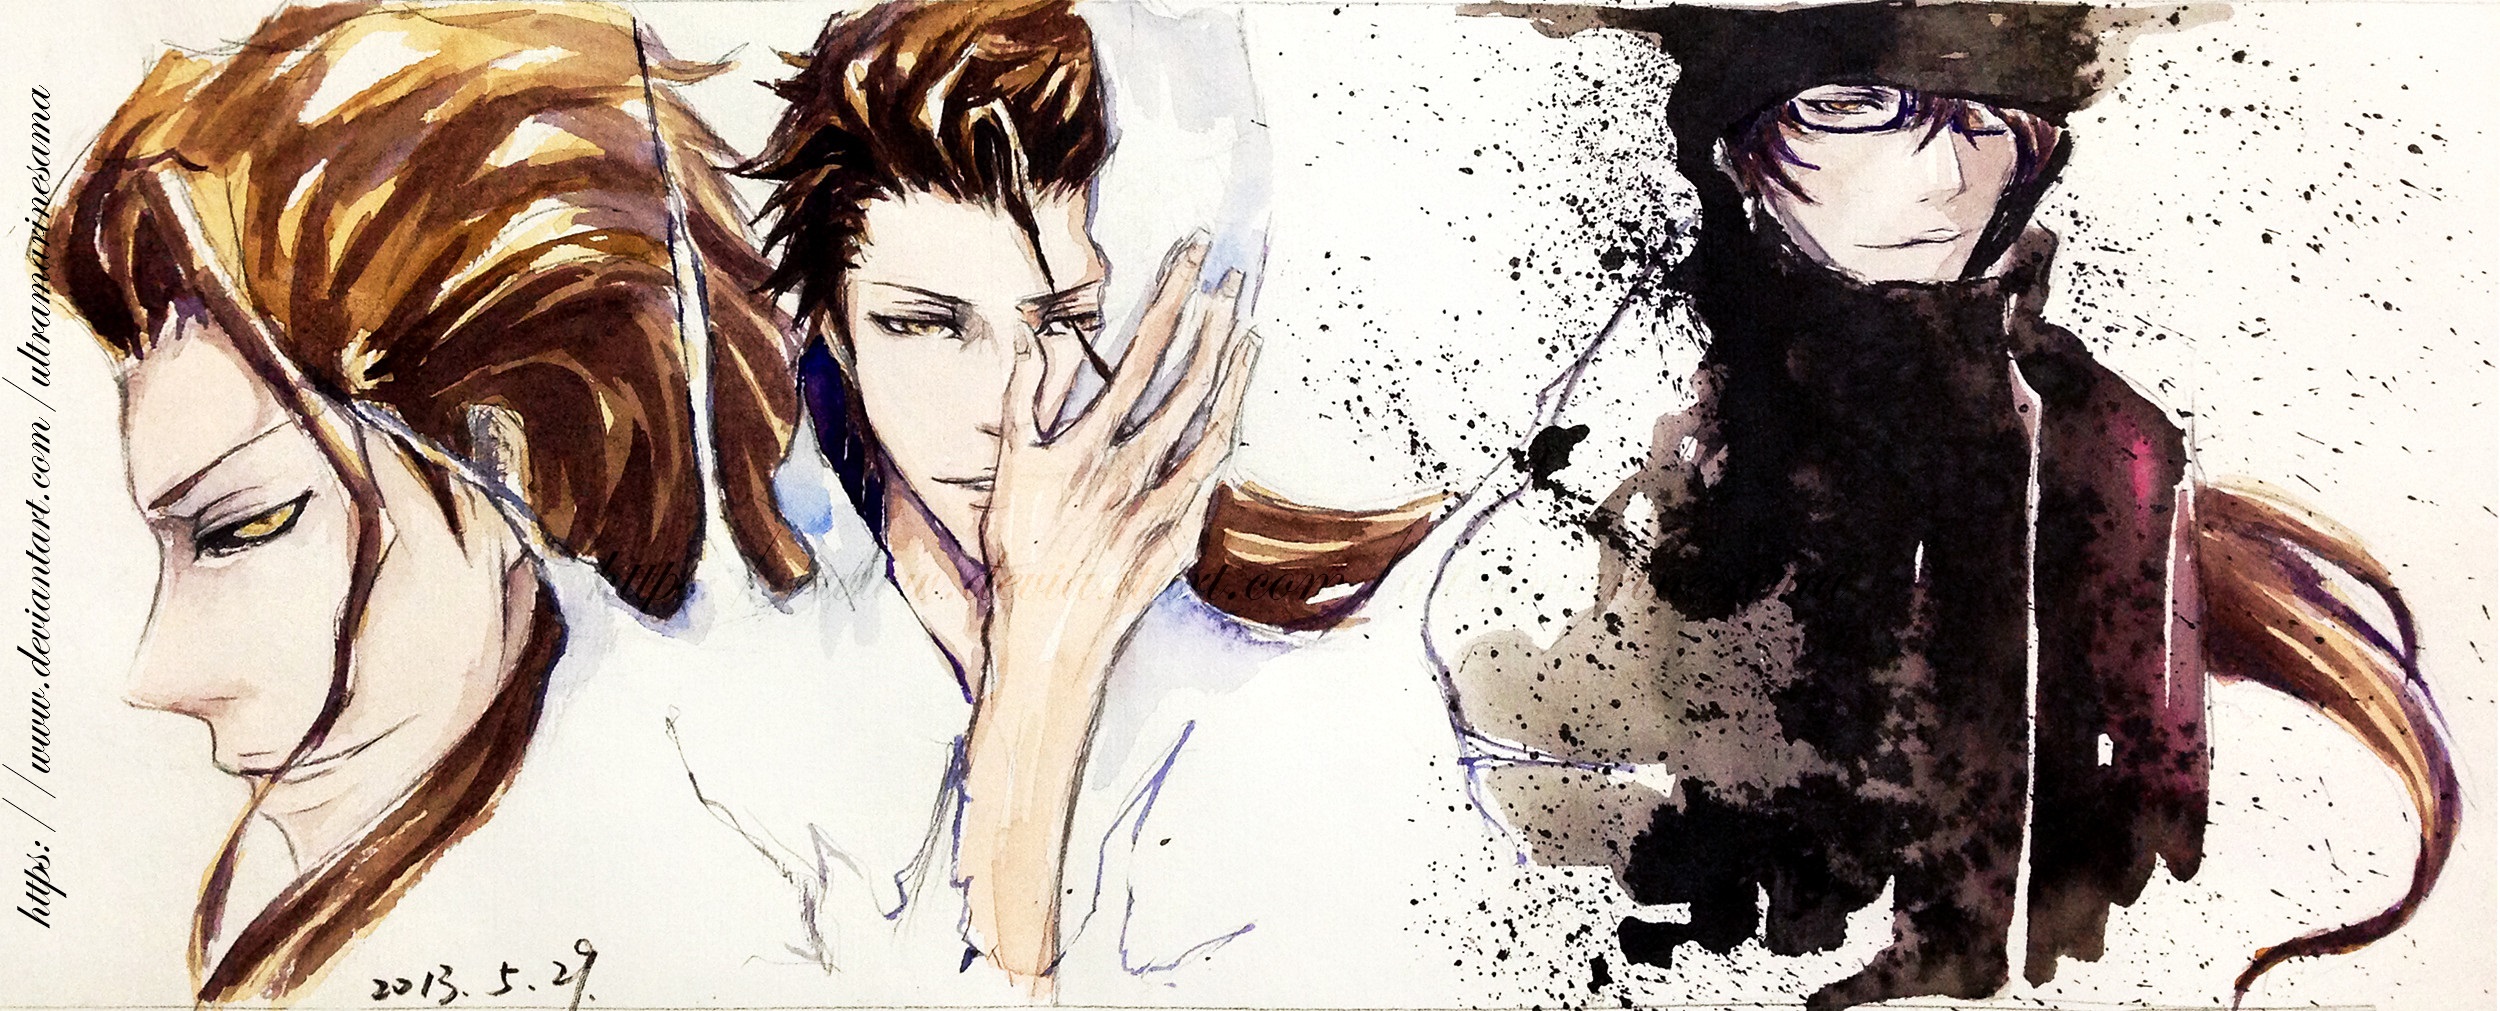 Aizen Sosuke - The King by Ultramarine